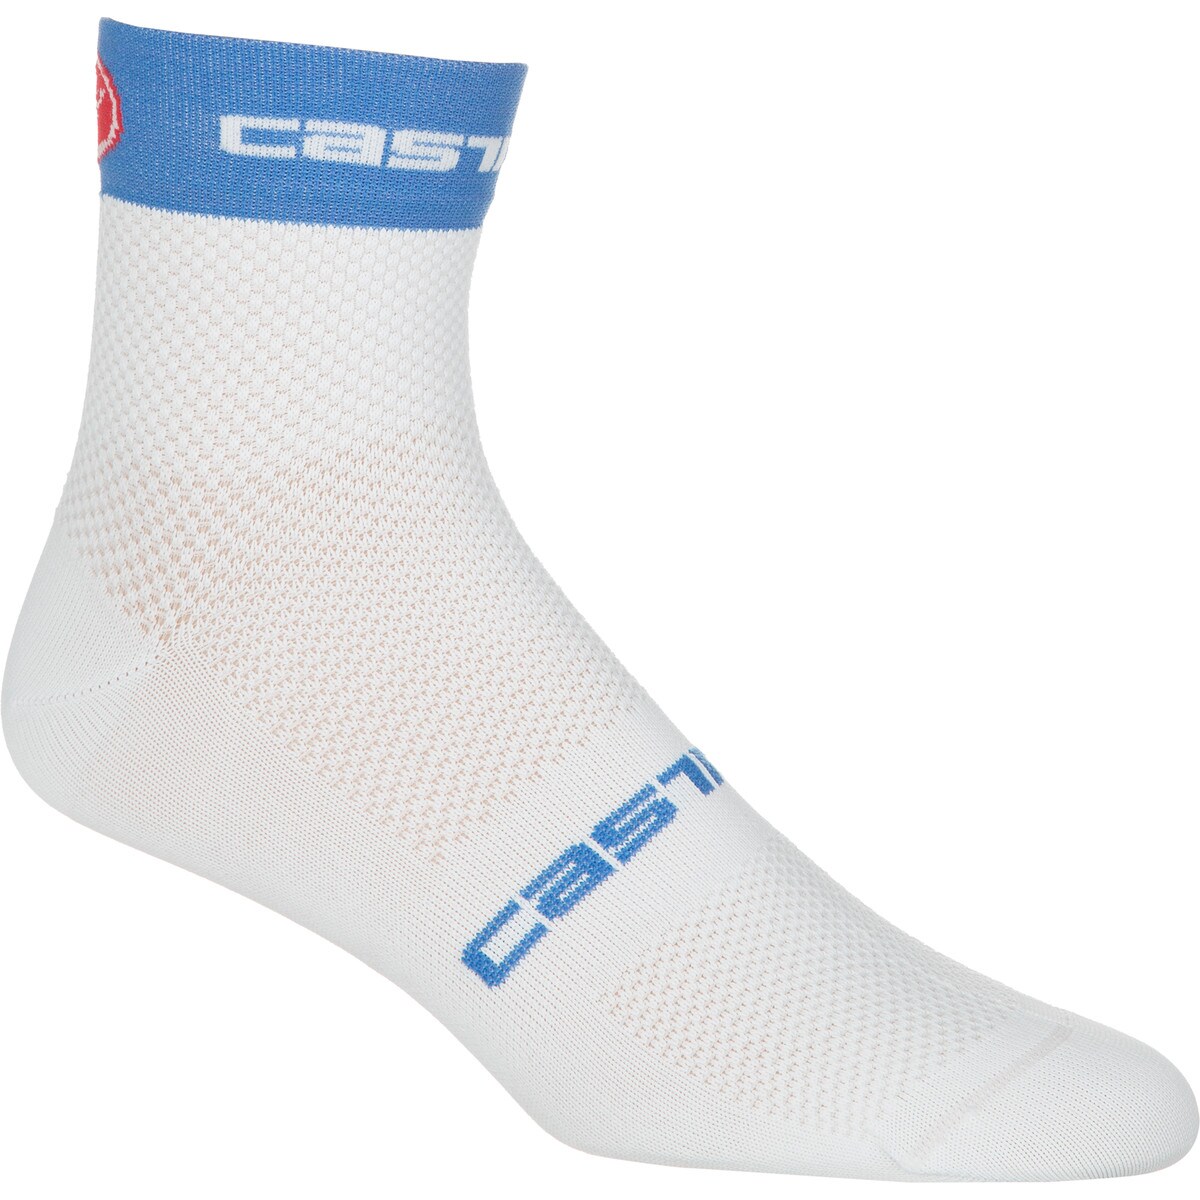 Castelli Free 6 Sock Men's